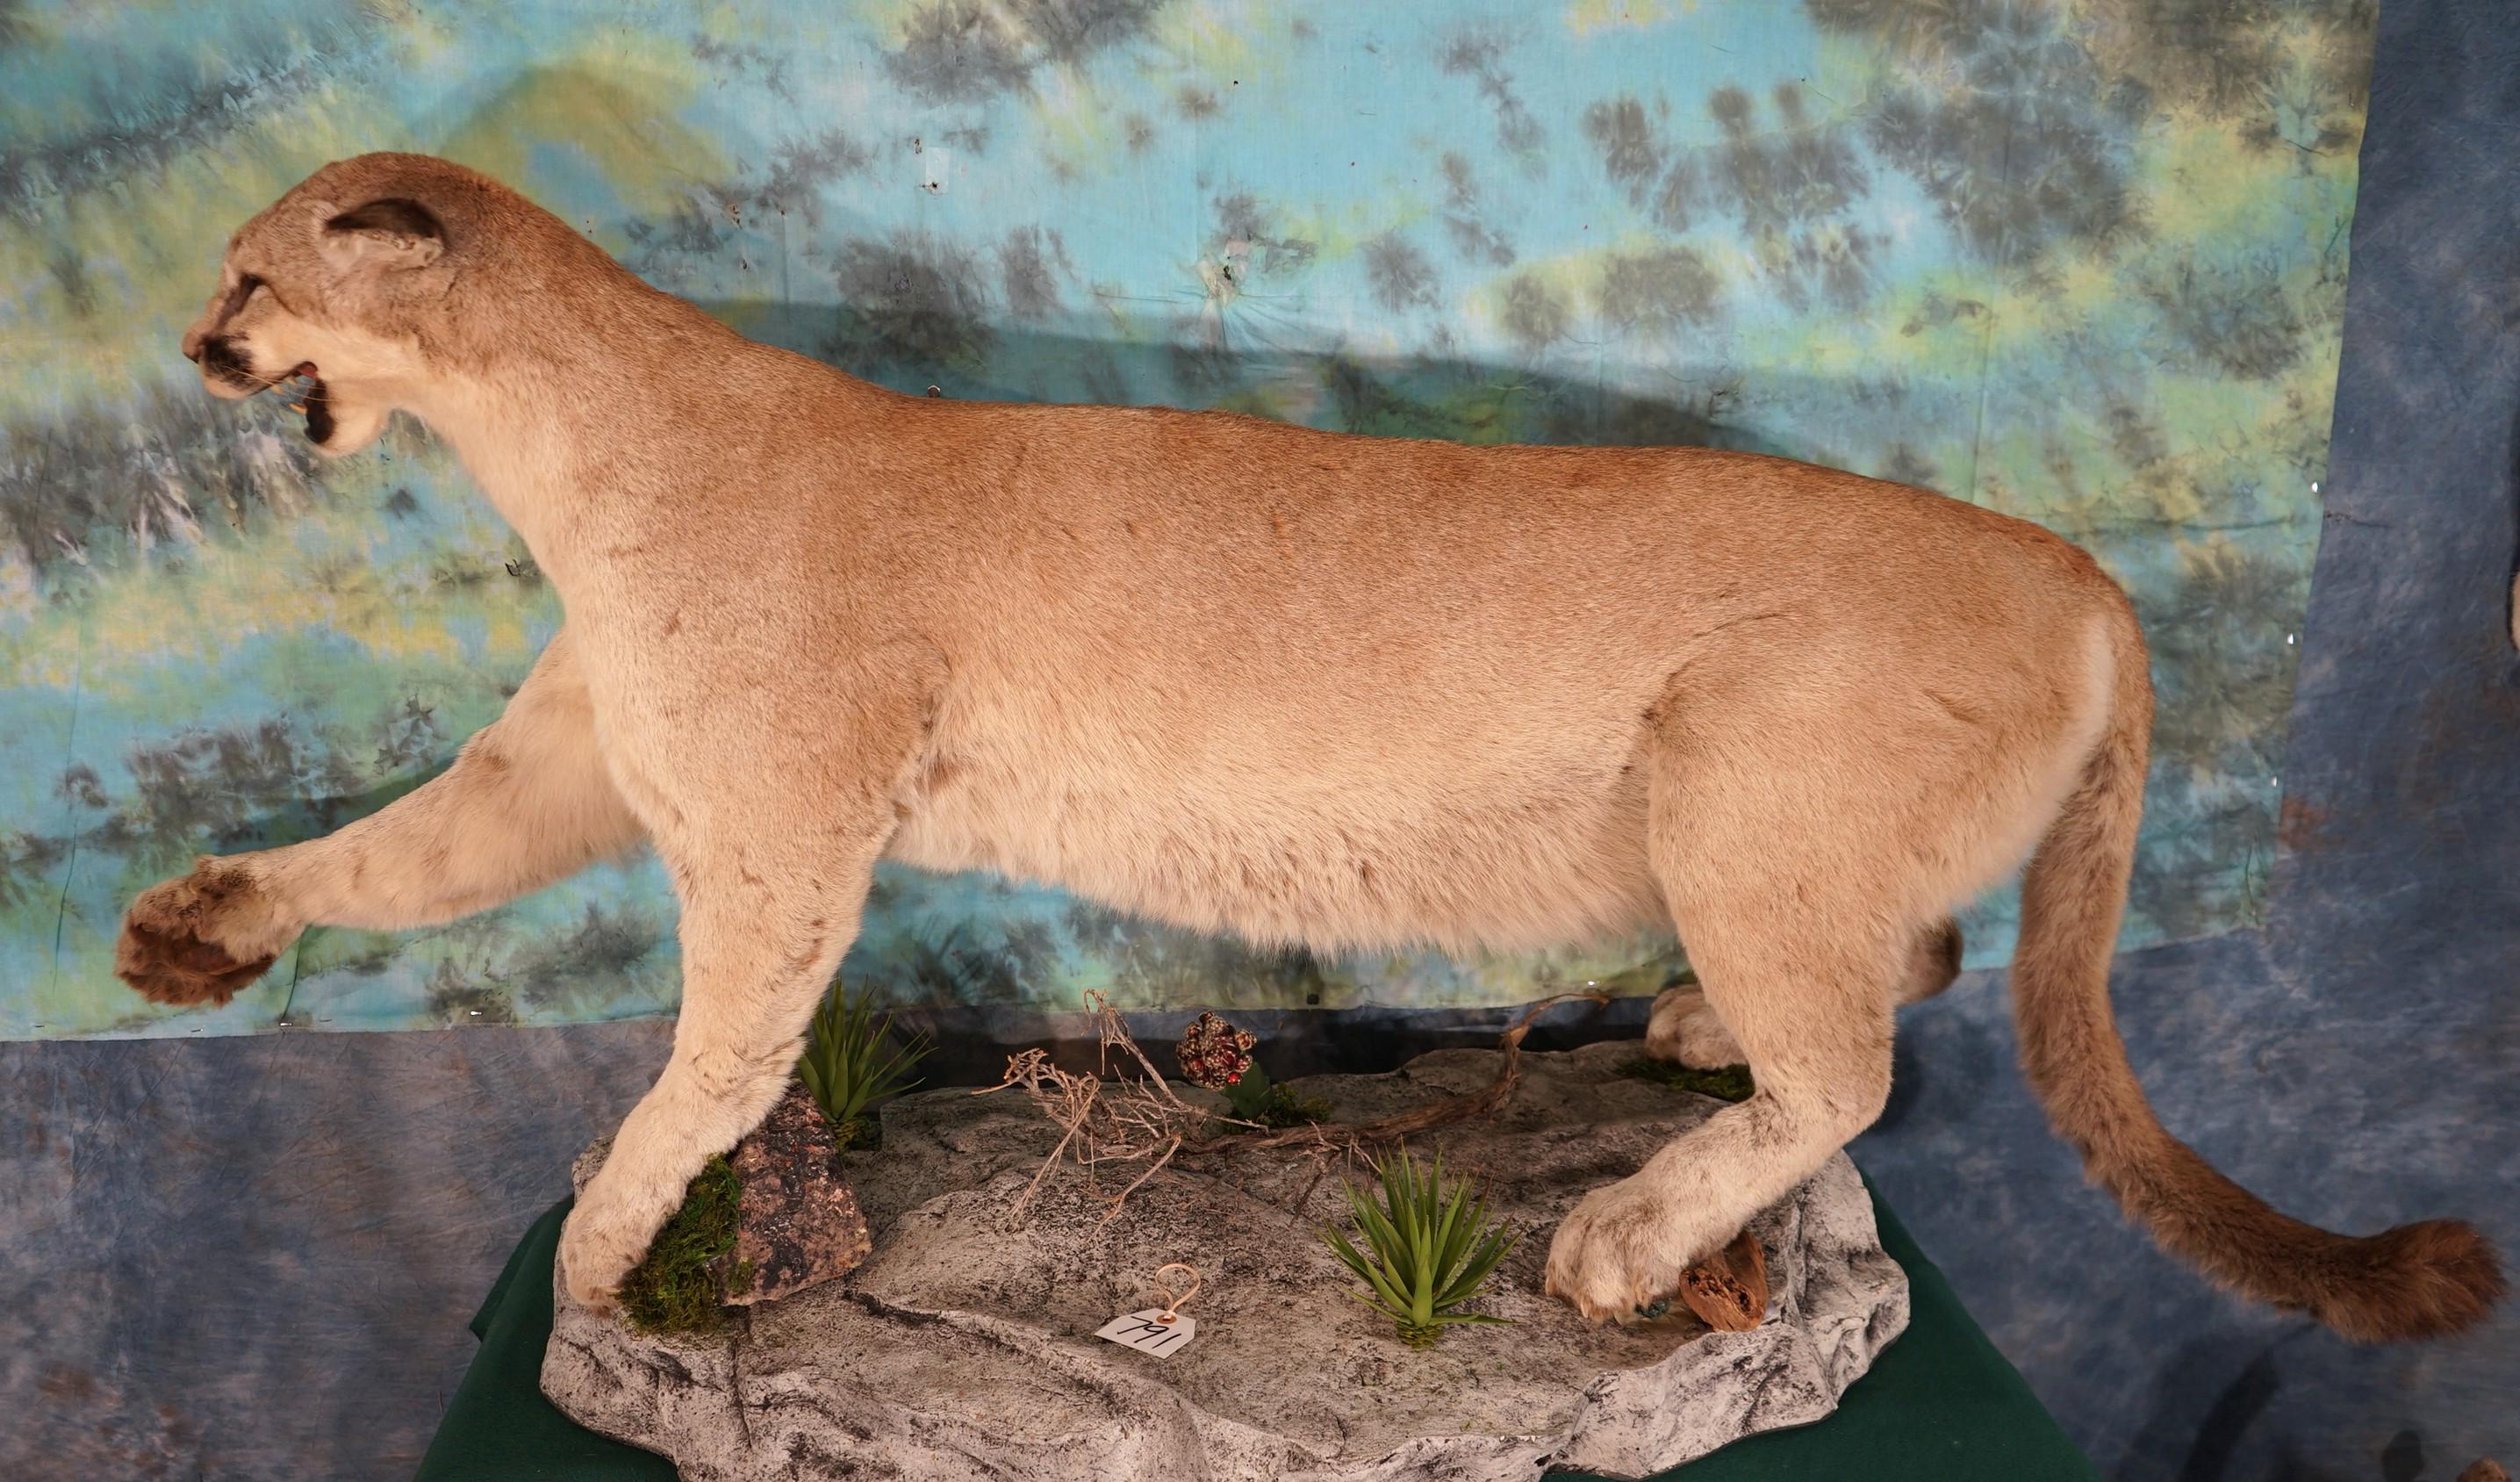 Mountain Lion in Natural Habitat Scene Full Body Taxidermy Mount